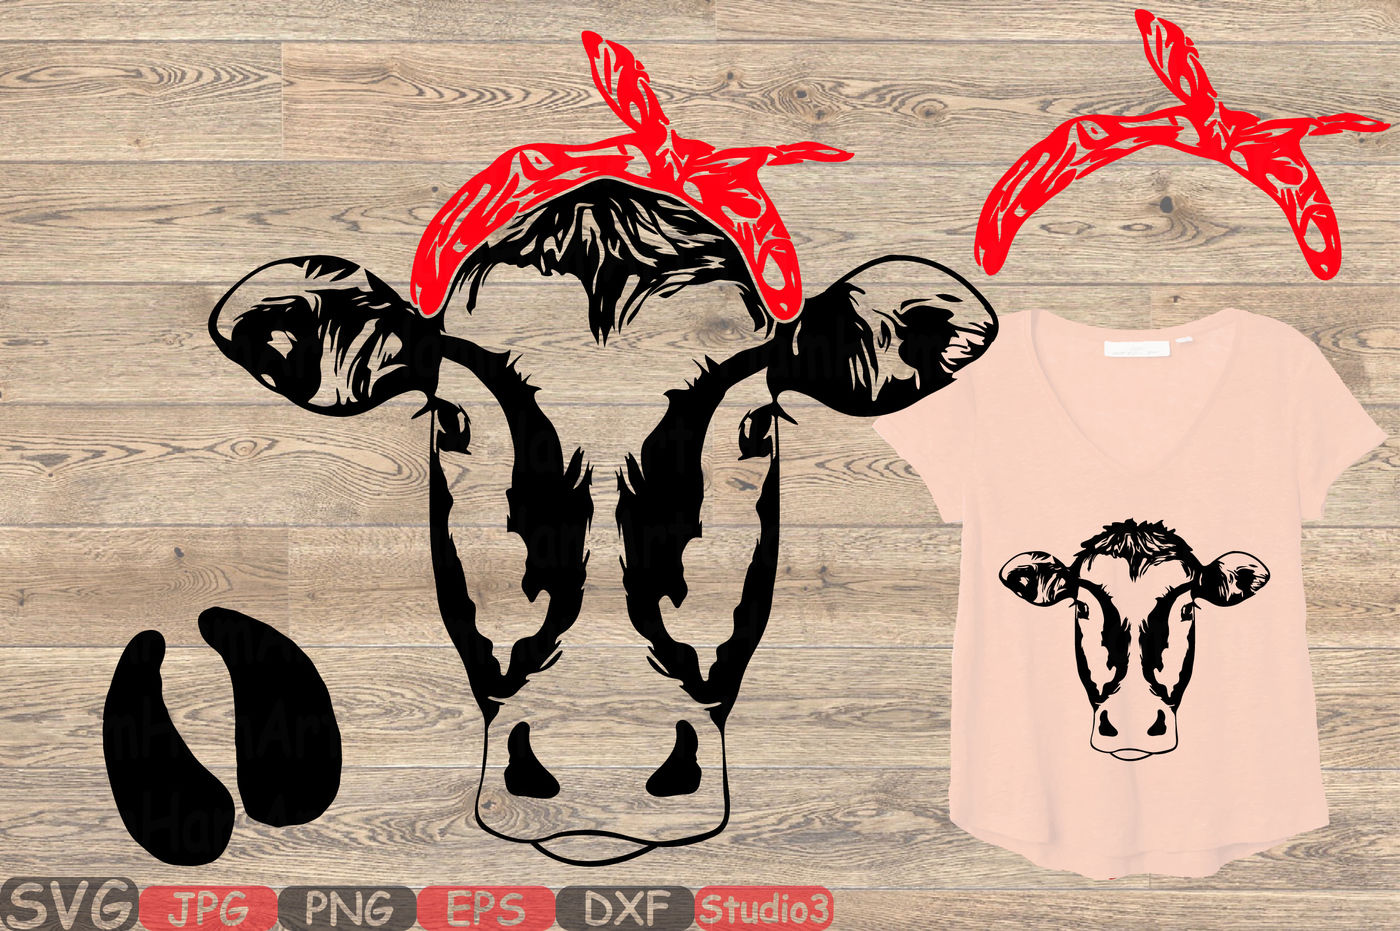 Download Cow Head whit Bandana Silhouette SVG cowboy western Farm ...